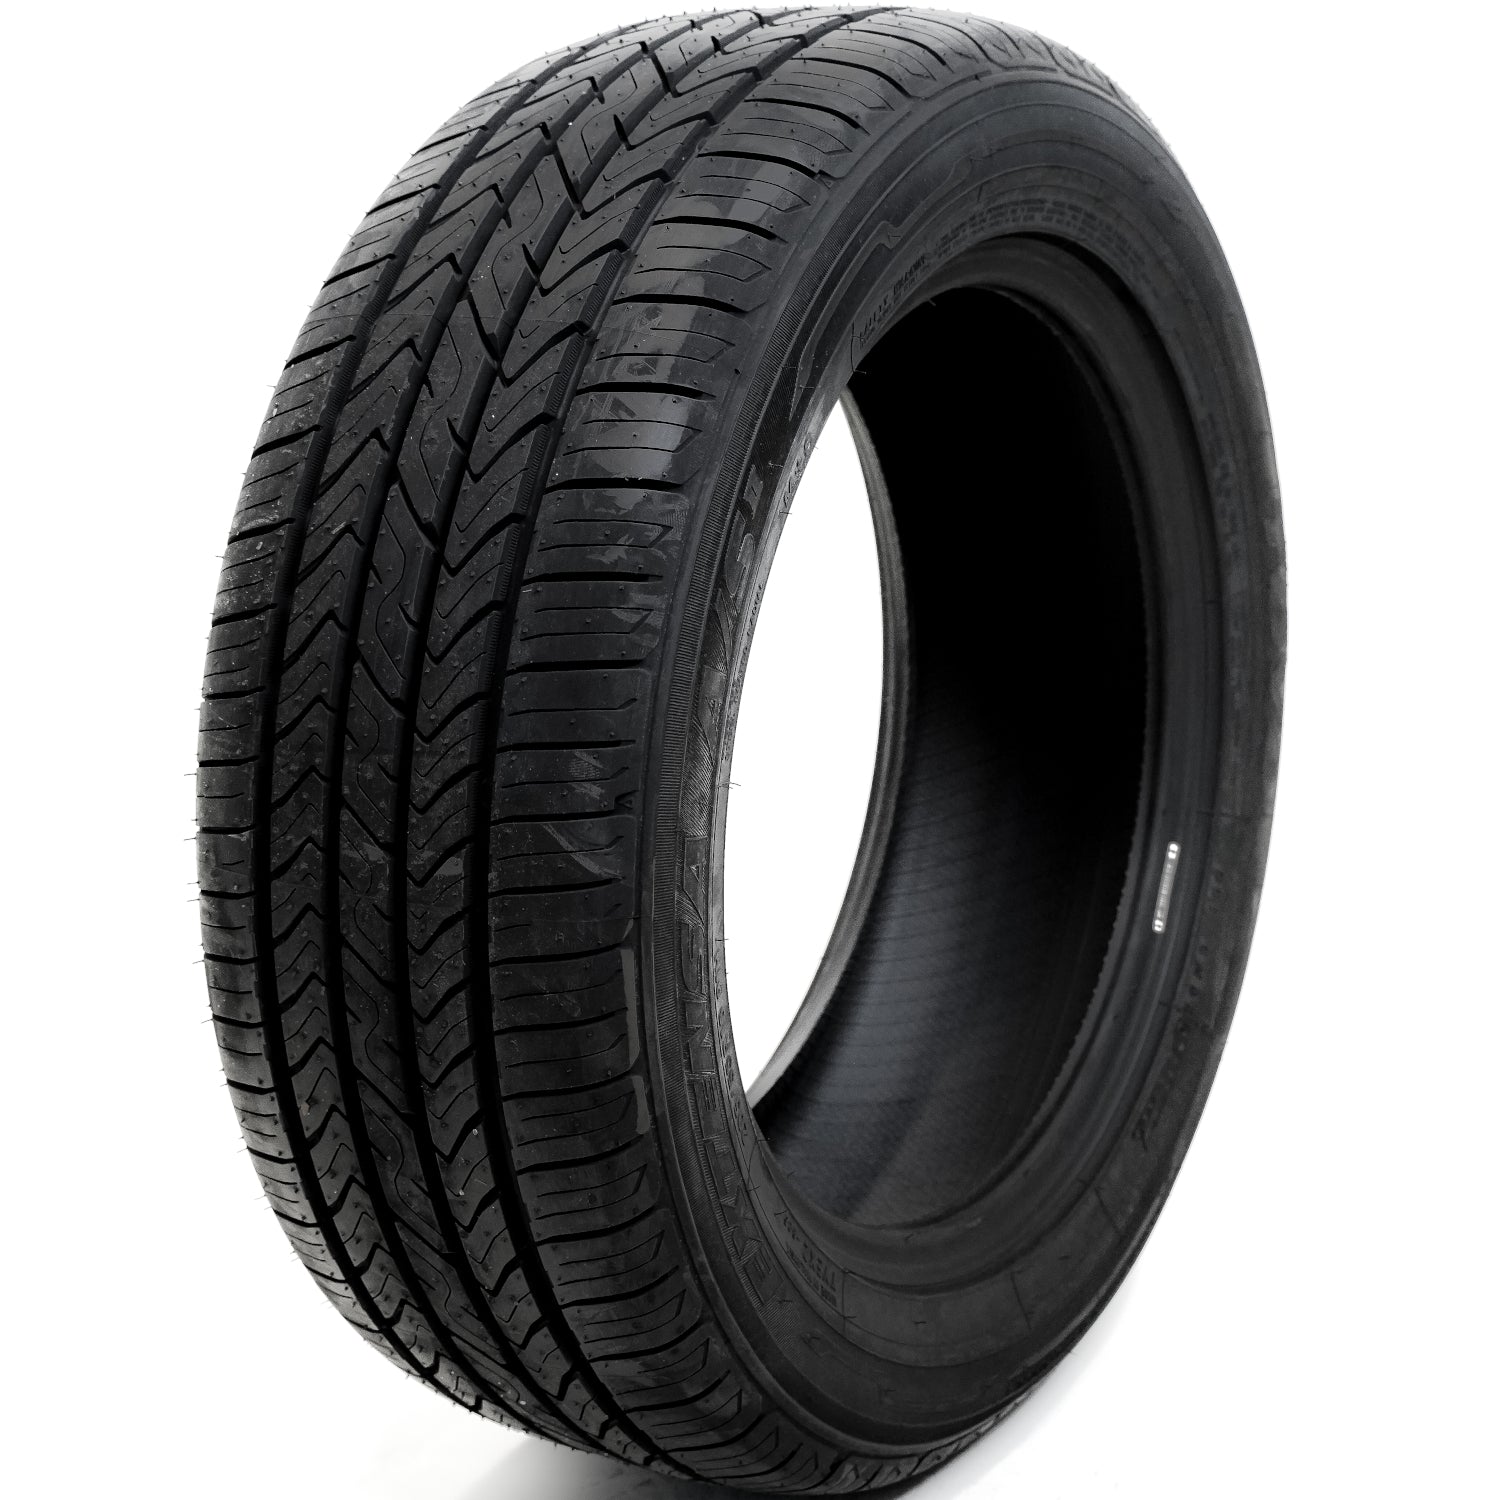 TOYO TIRES EXTENSA A/S II 235/50R17 (26.3X9.3R 17) Tires